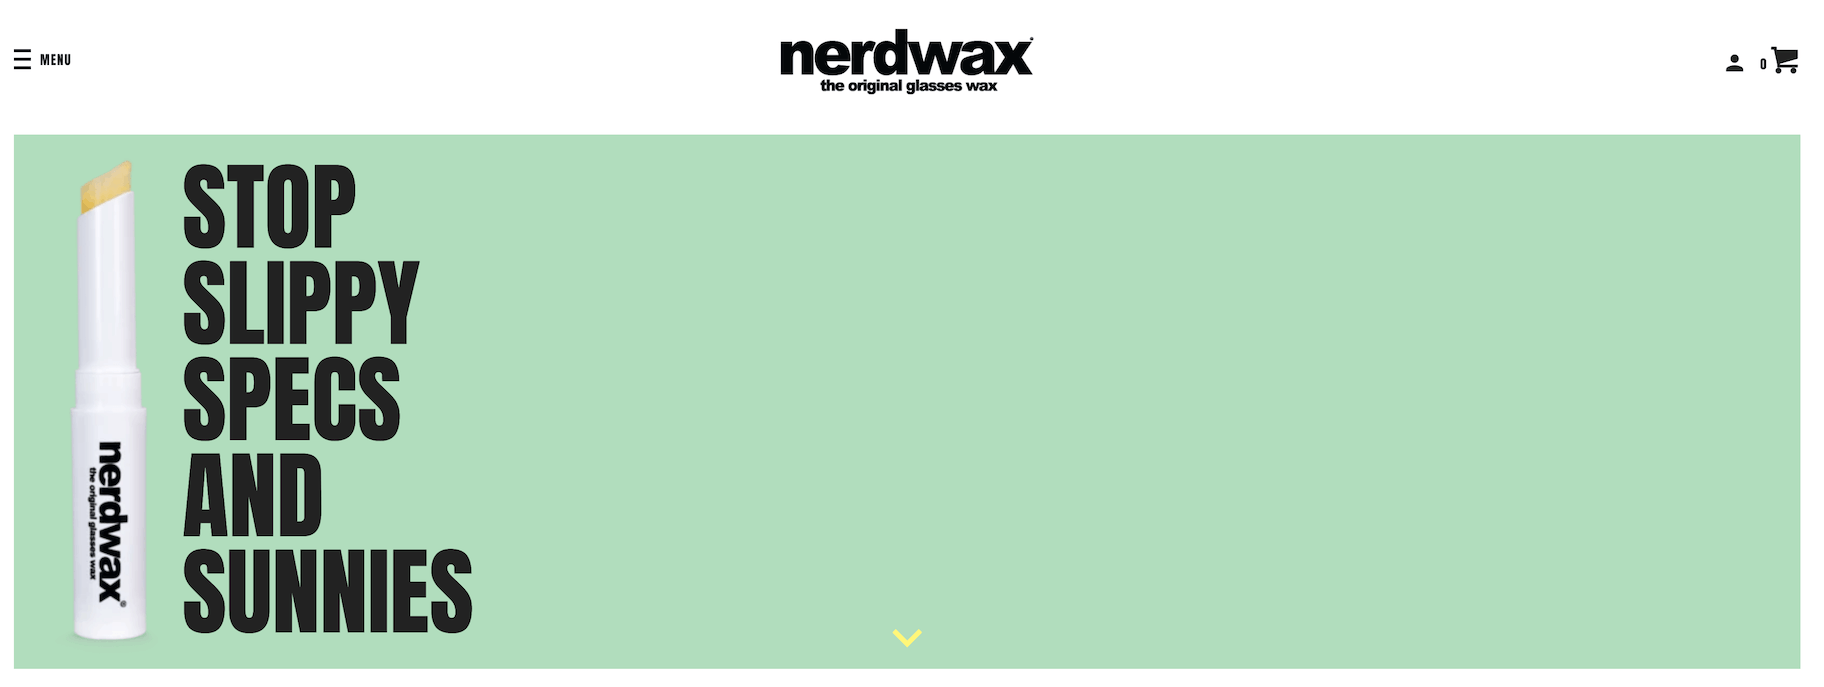 Nerdwax